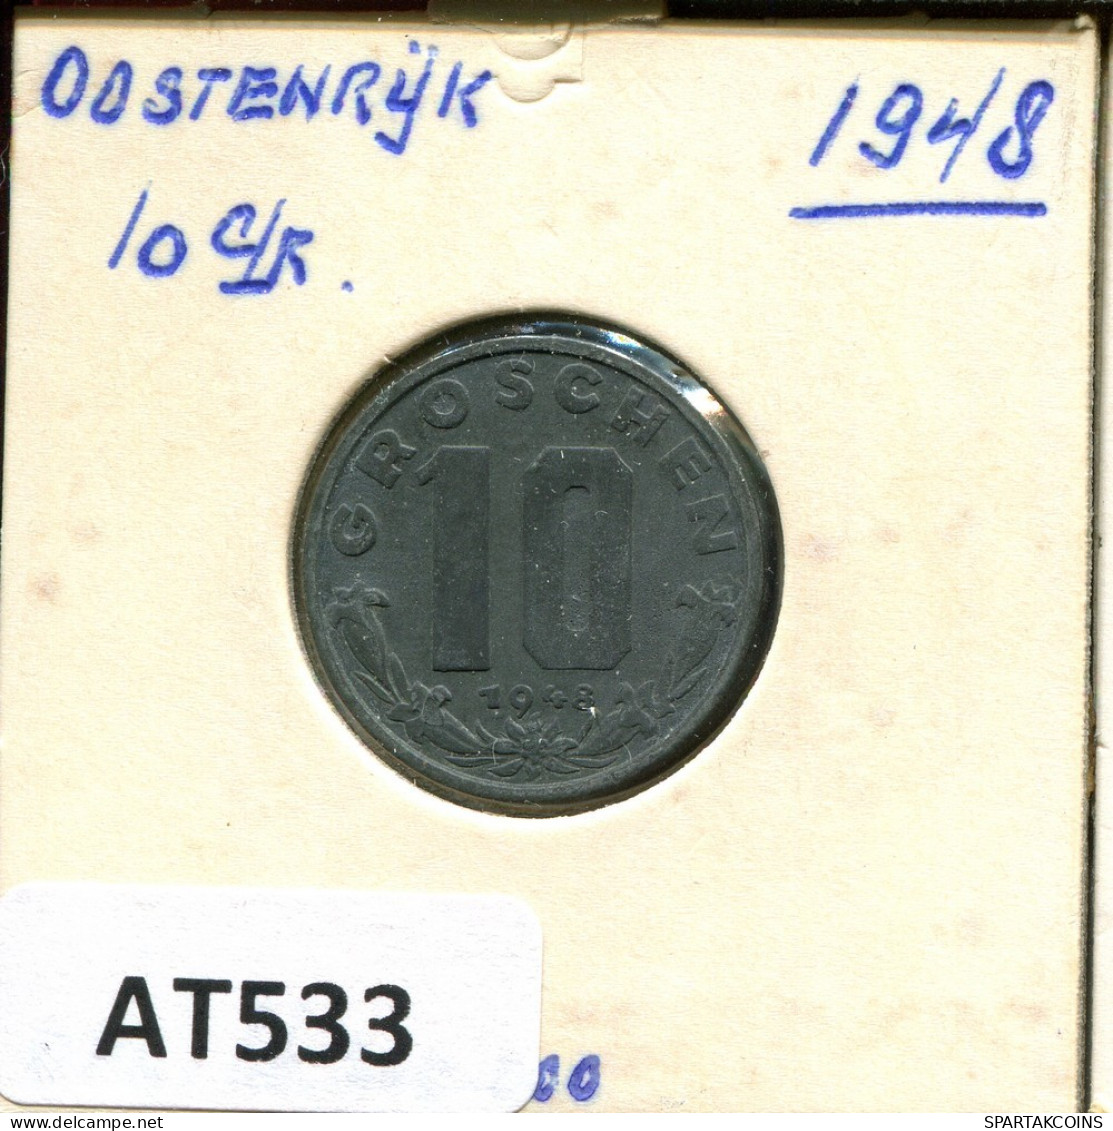 10 GROSCHEN 1948 AUSTRIA Coin #AT533.U.A - Austria